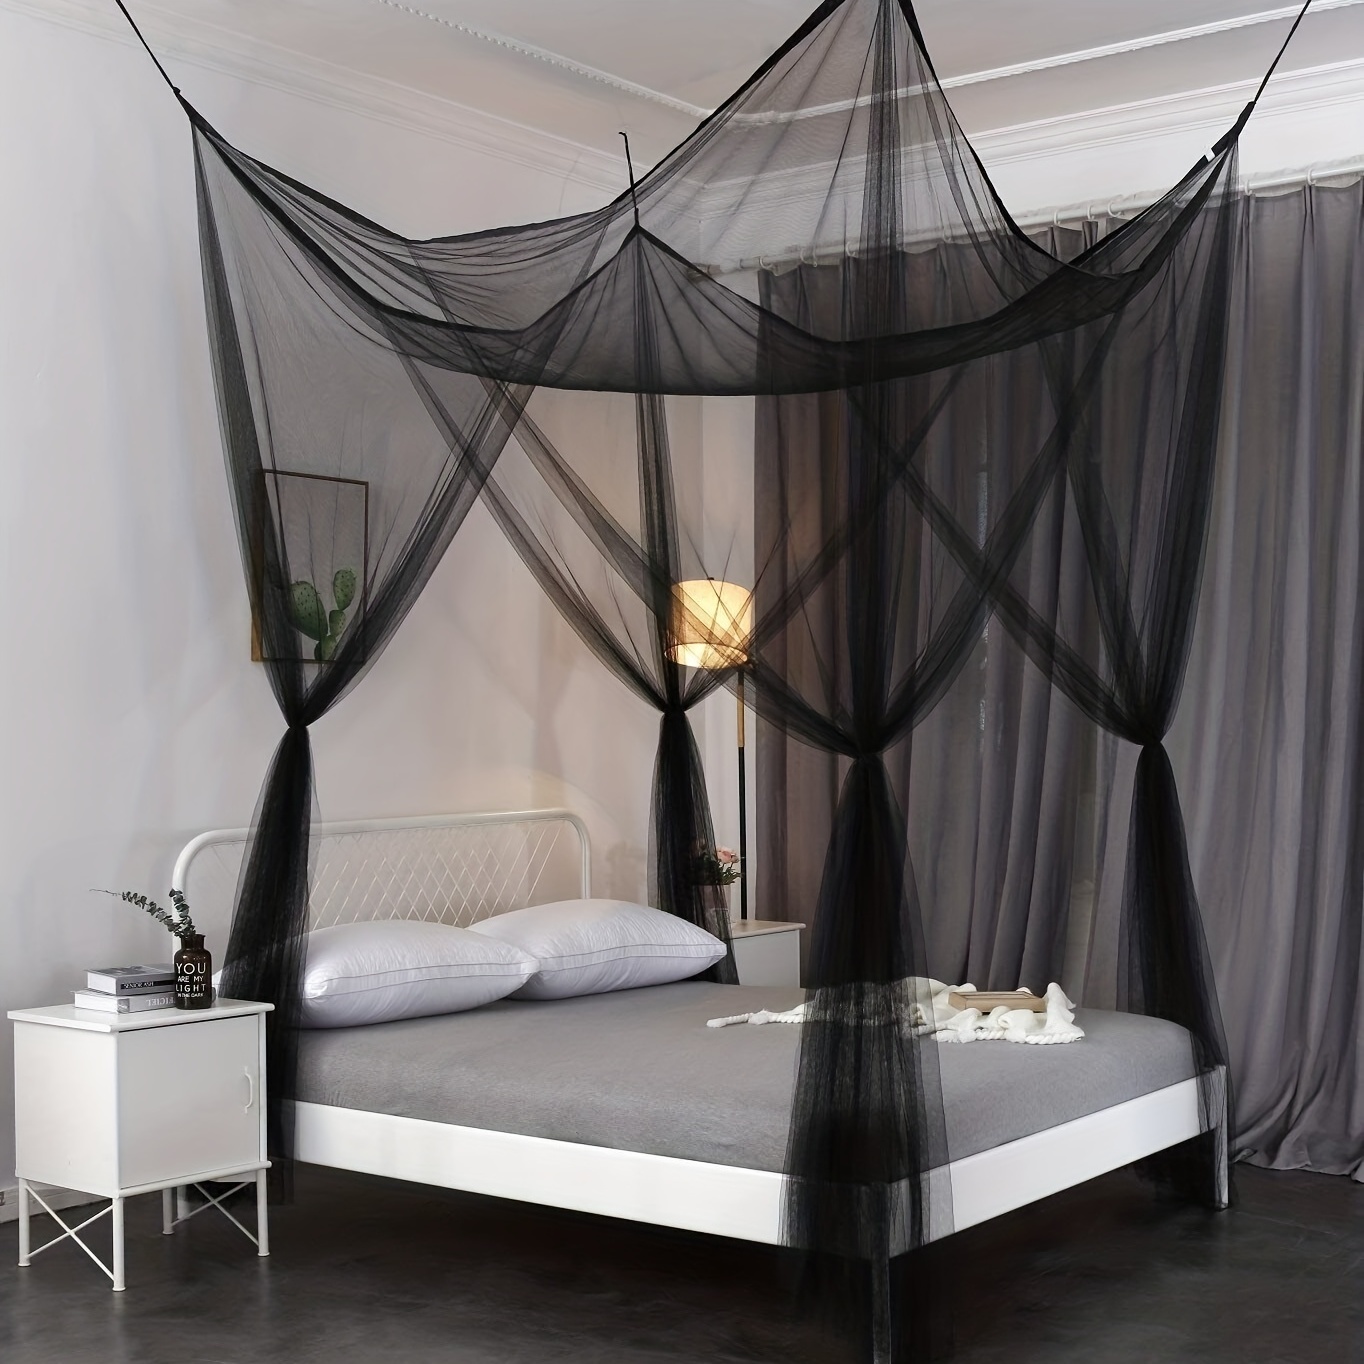 2 Mosquito Nets